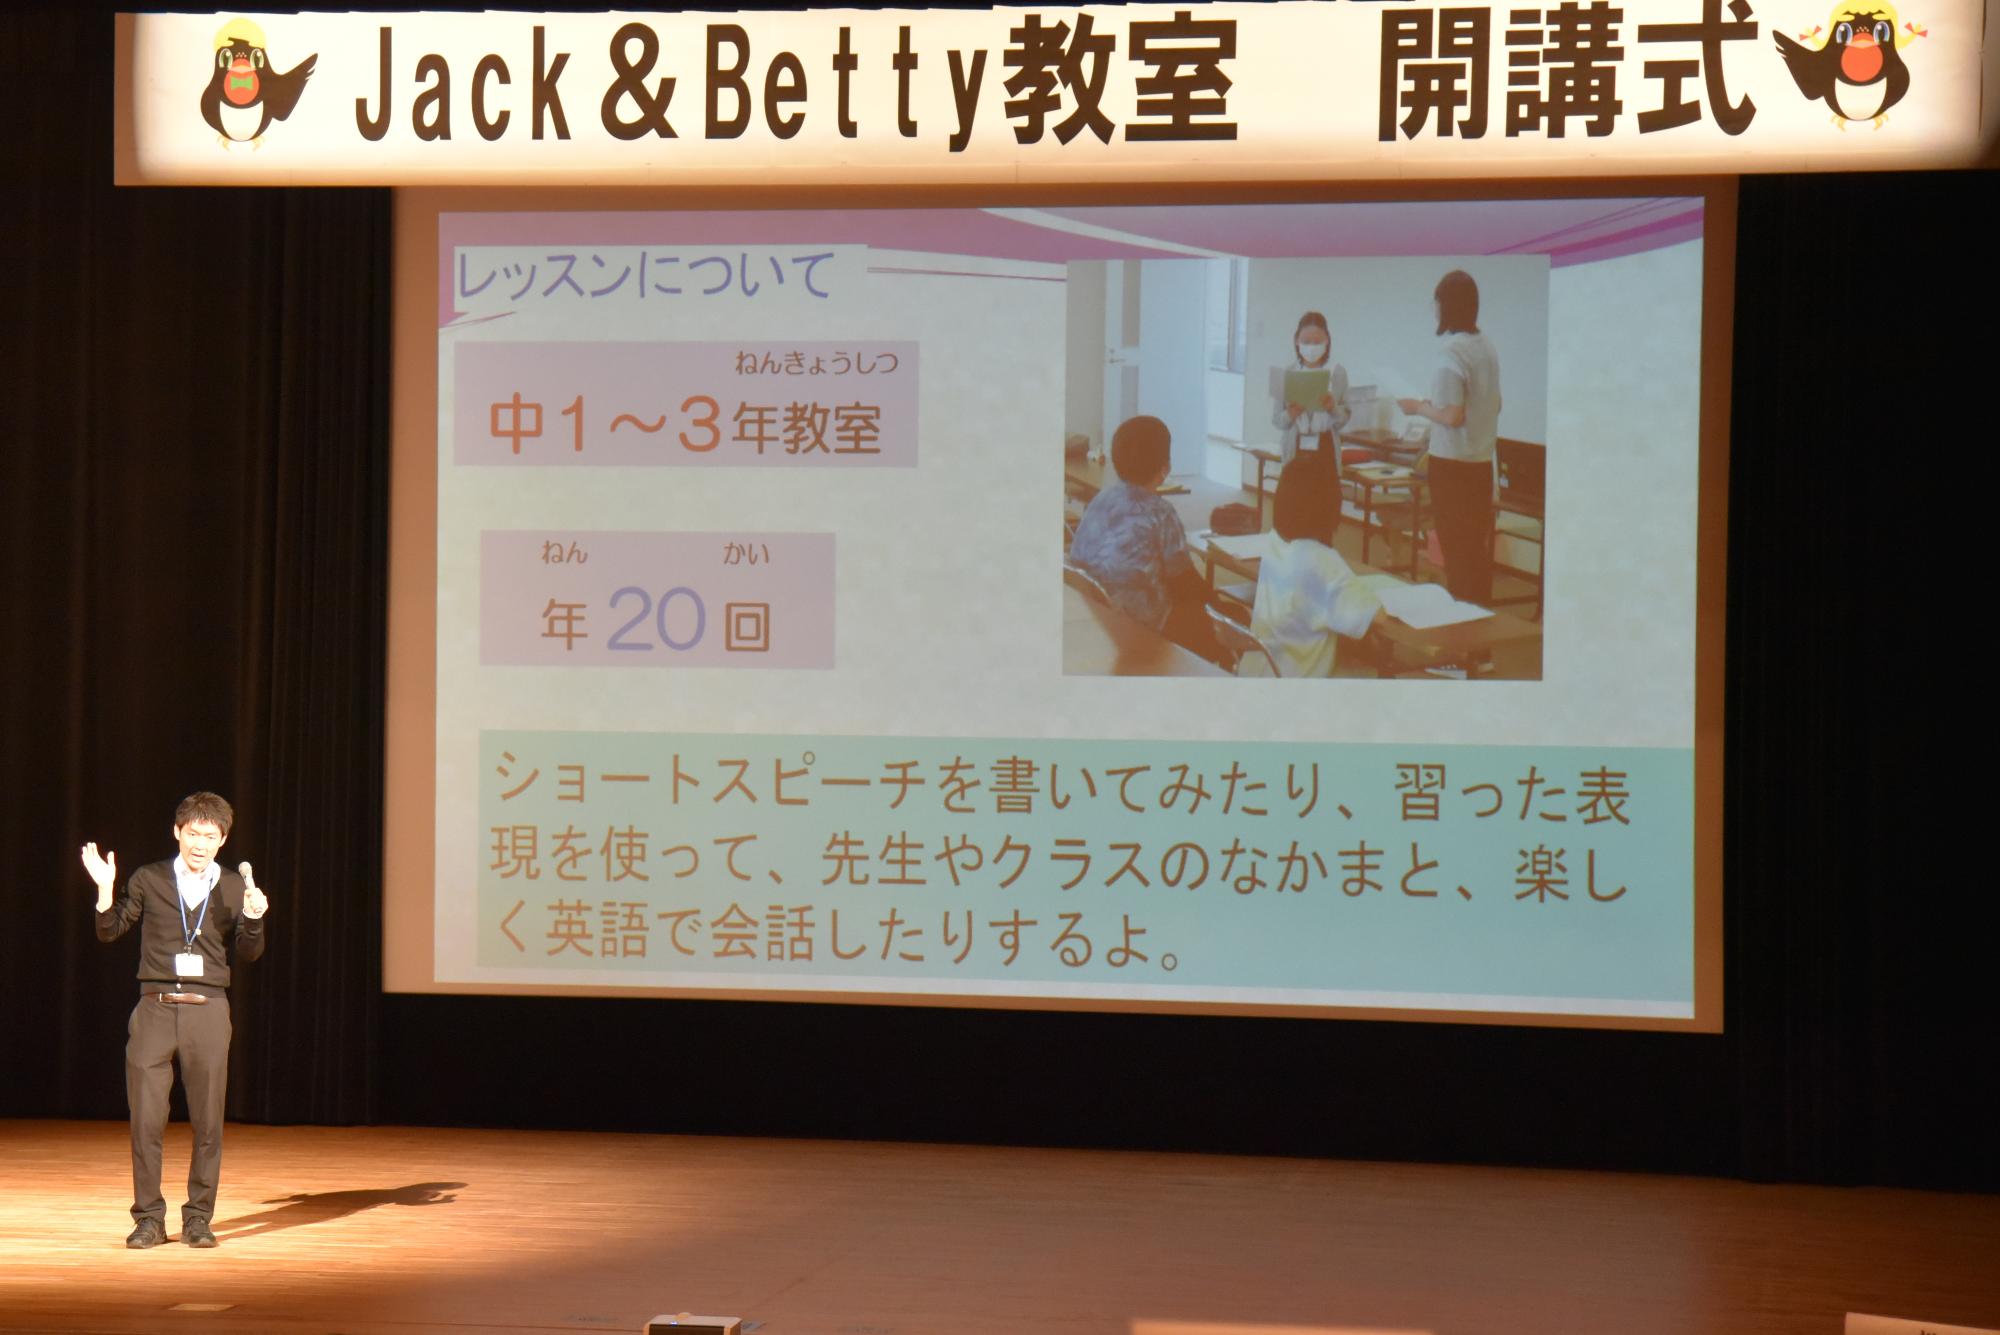 Jack&Betty教室開講式の画像